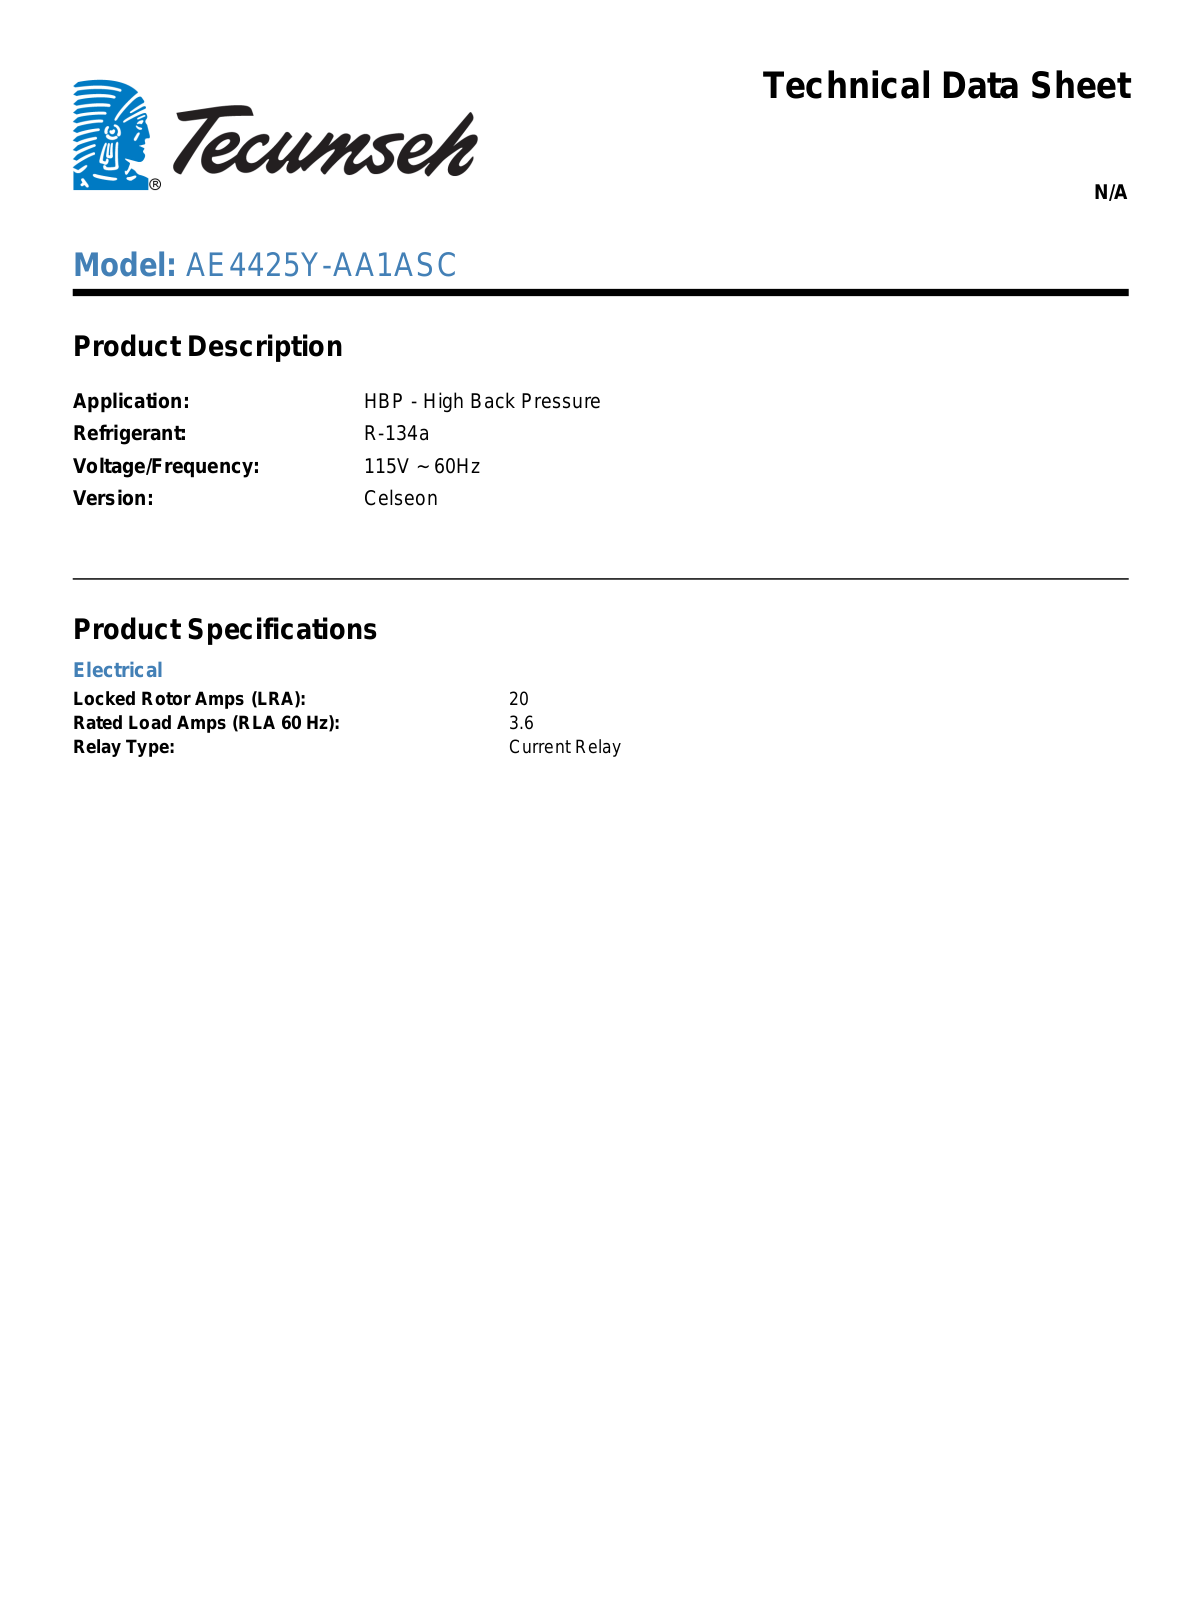 Tecumseh AE4425Y-AA1ASC User Manual